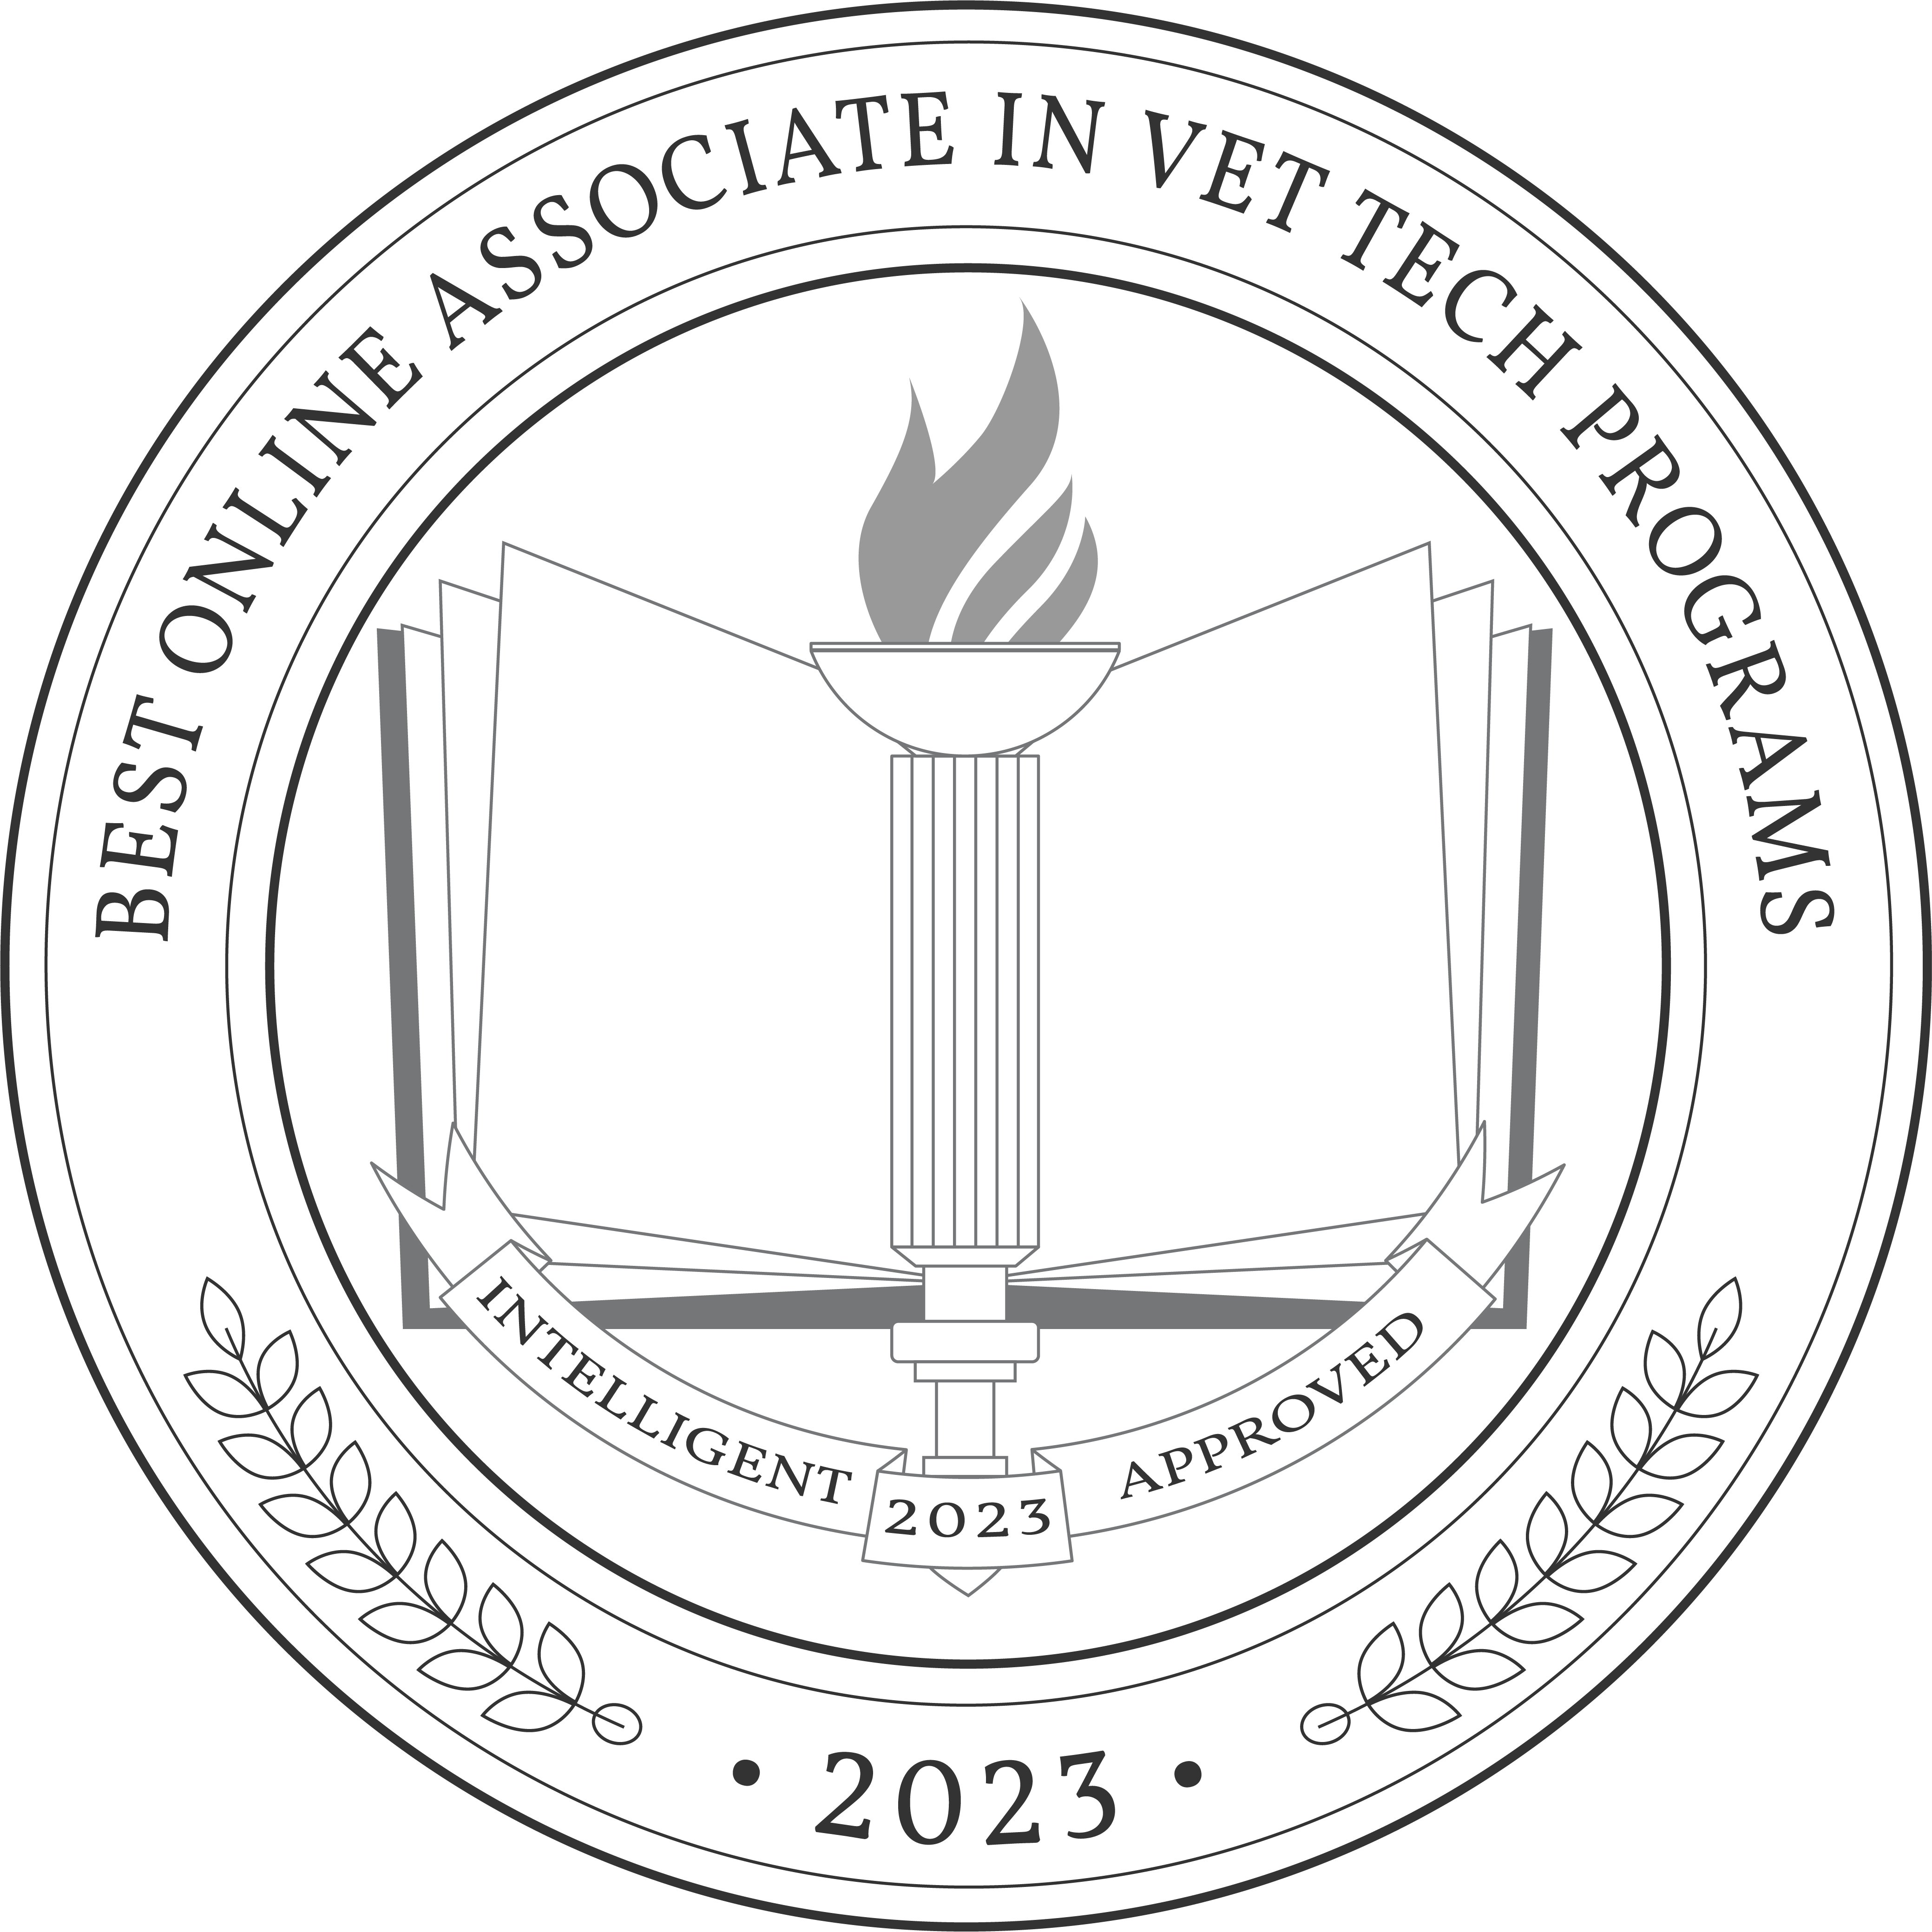 Best Online Associate in Vet Tech Programs Badge